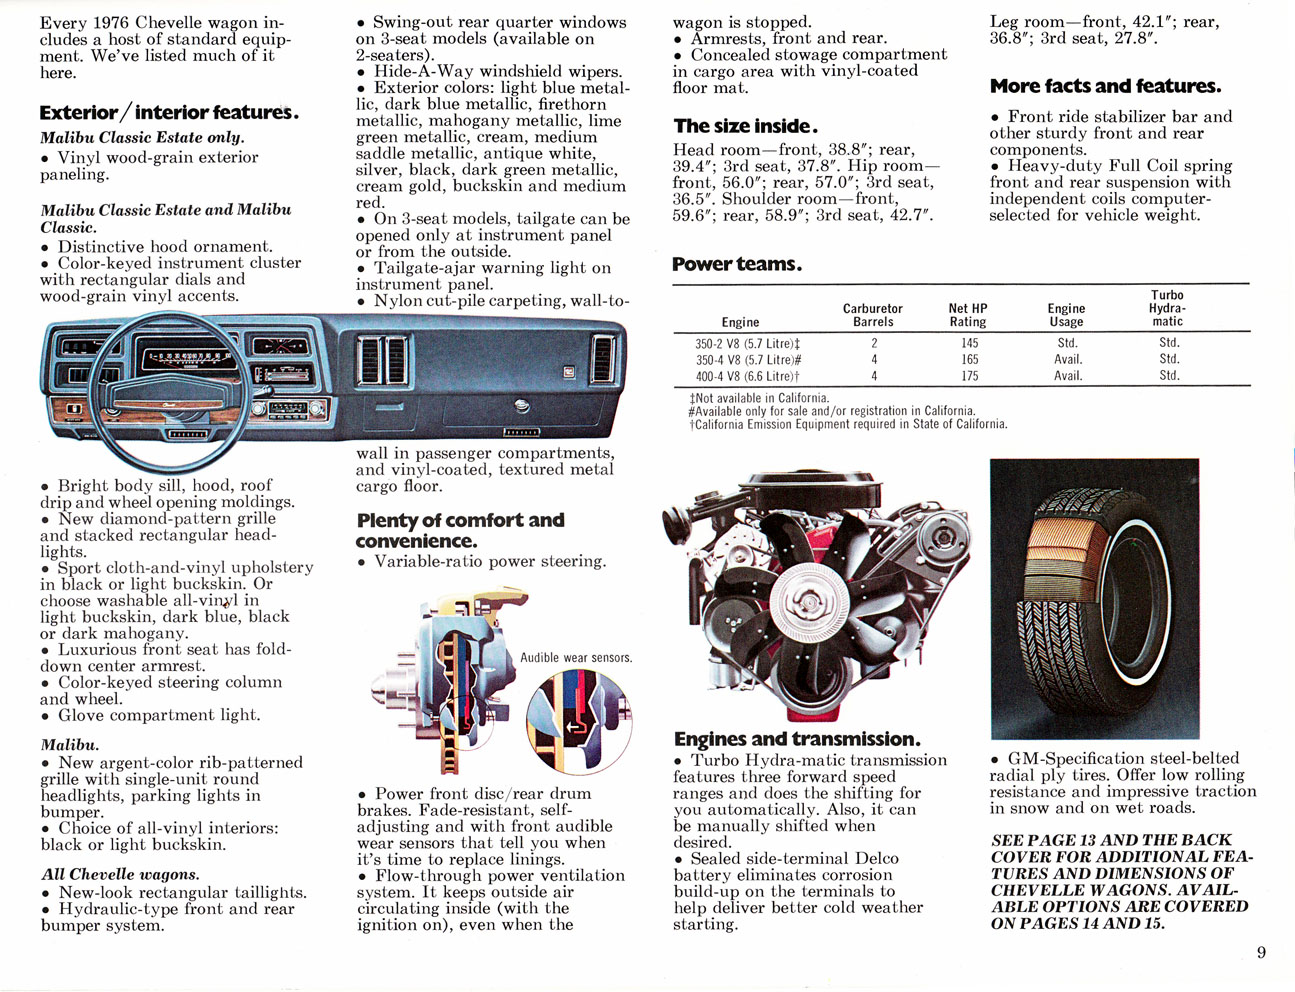 1976 Chevrolet Wagons-09